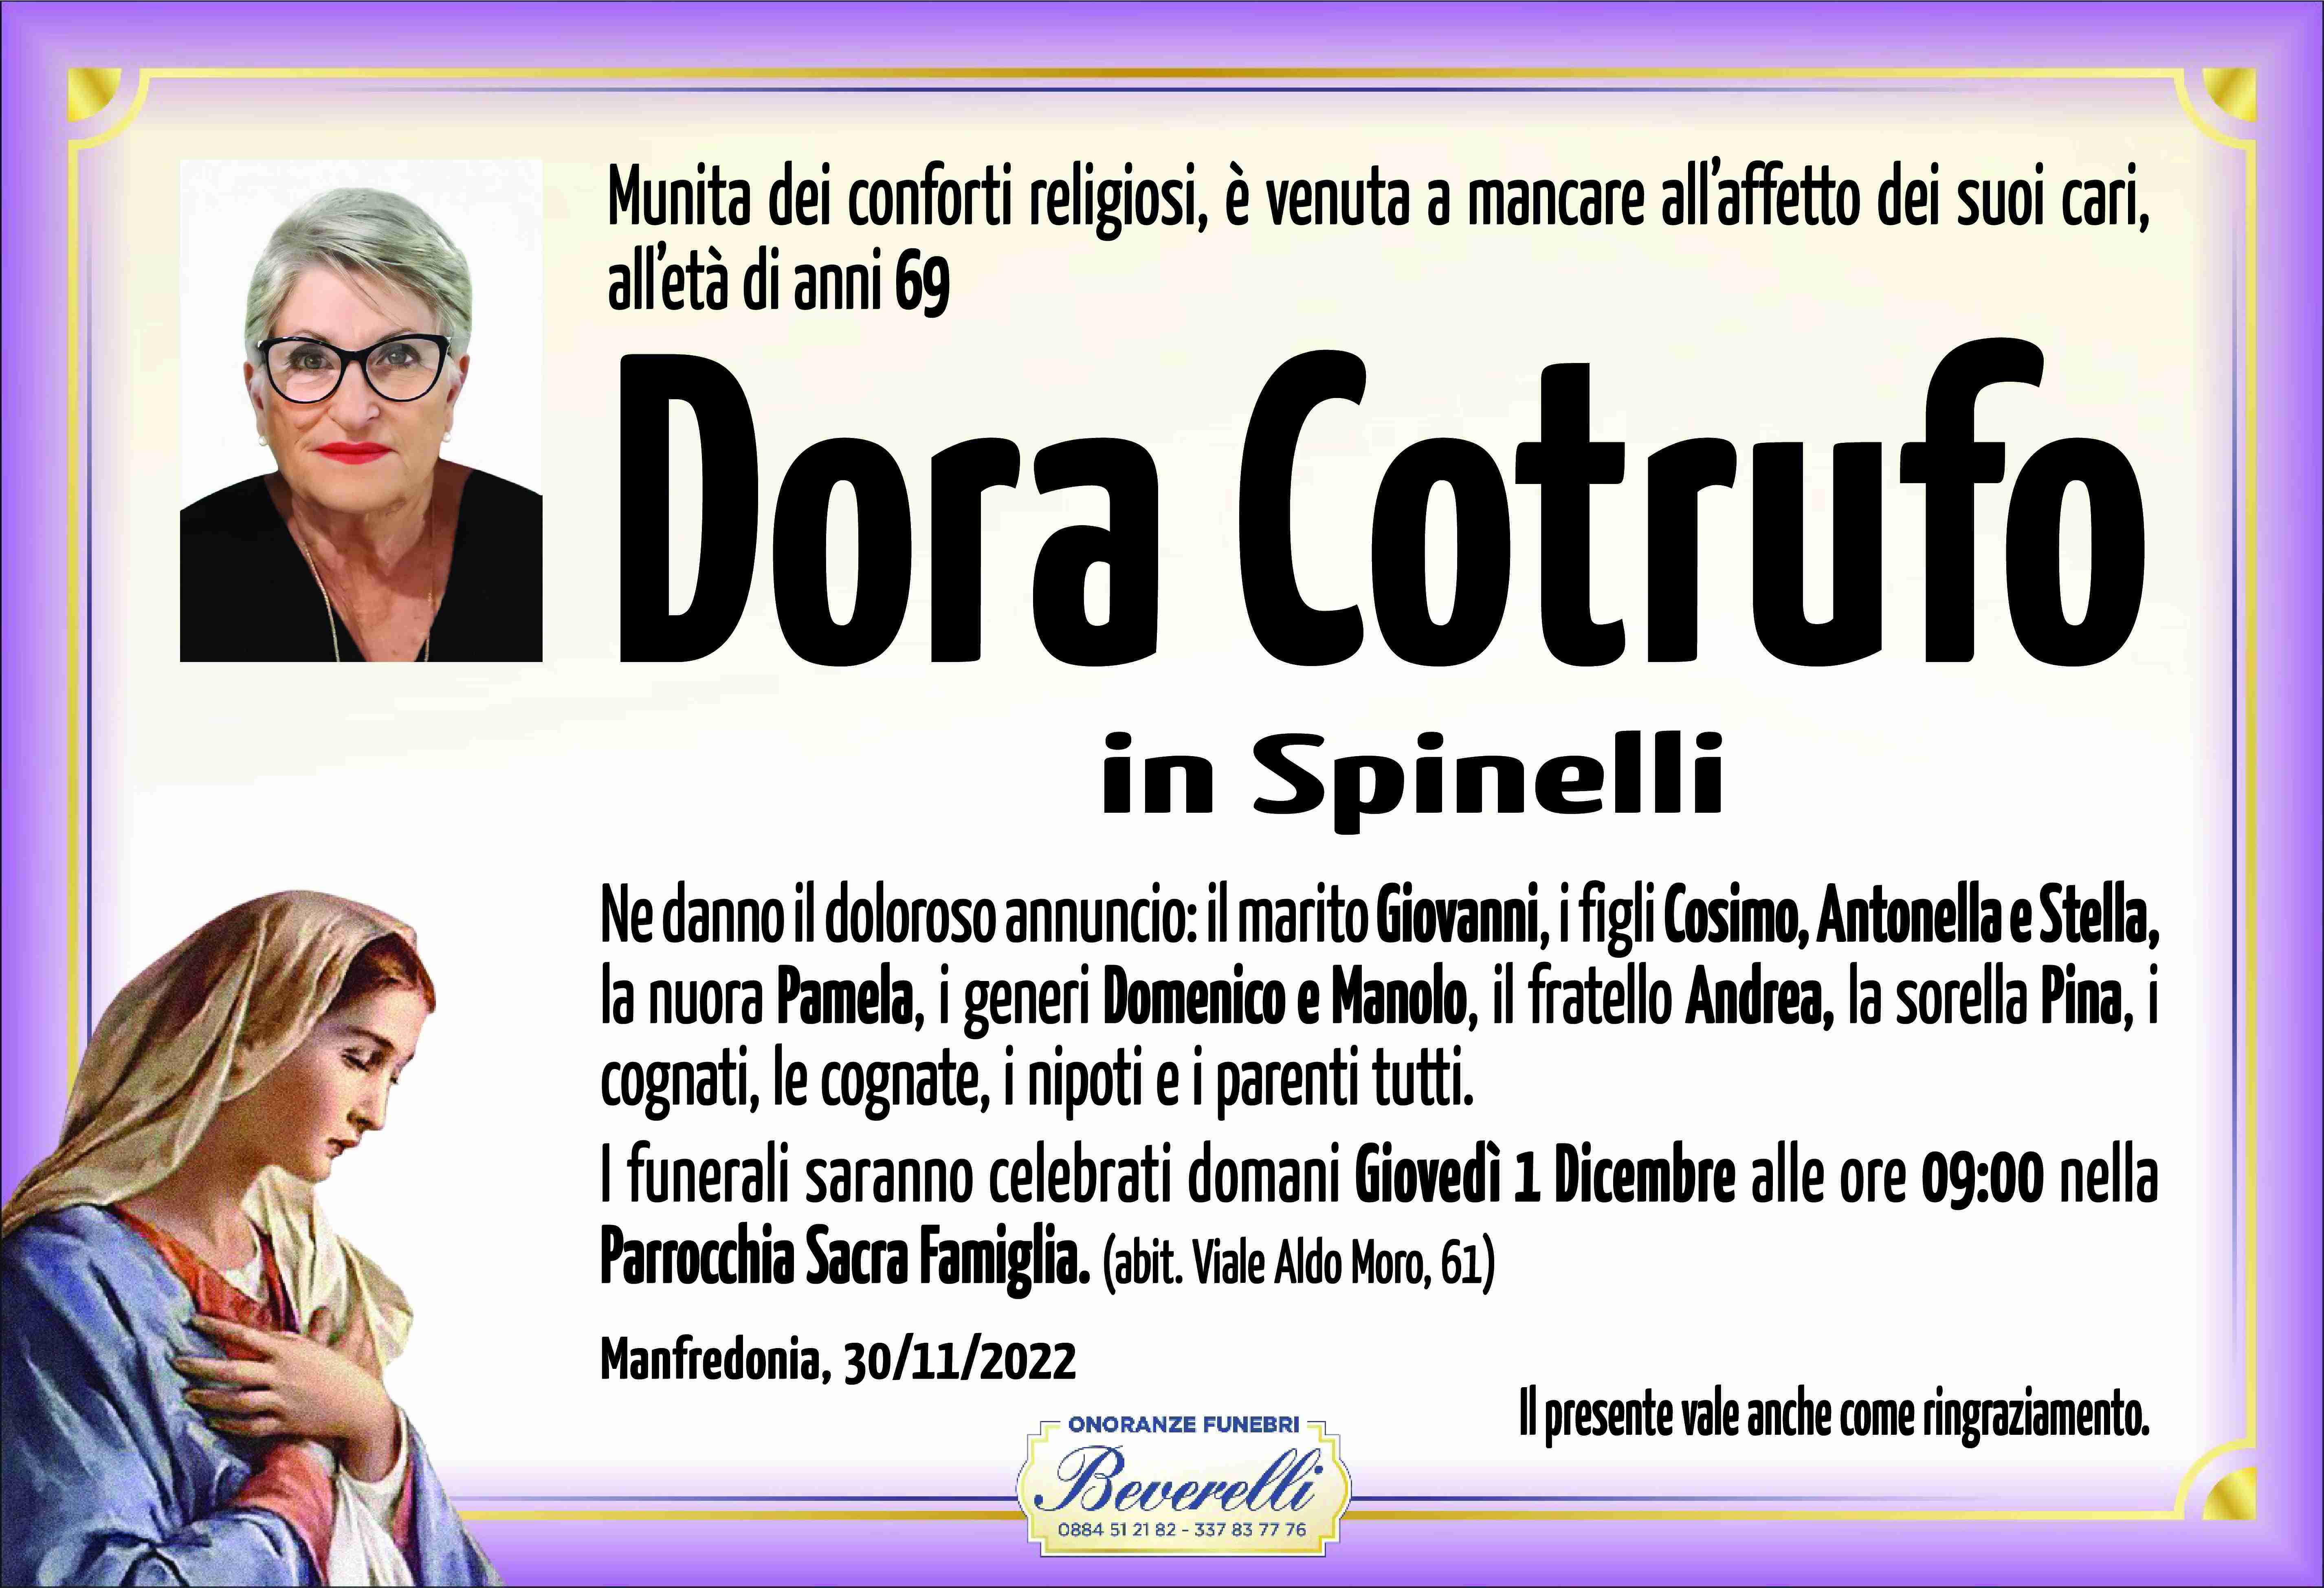 Dora Cotrufo